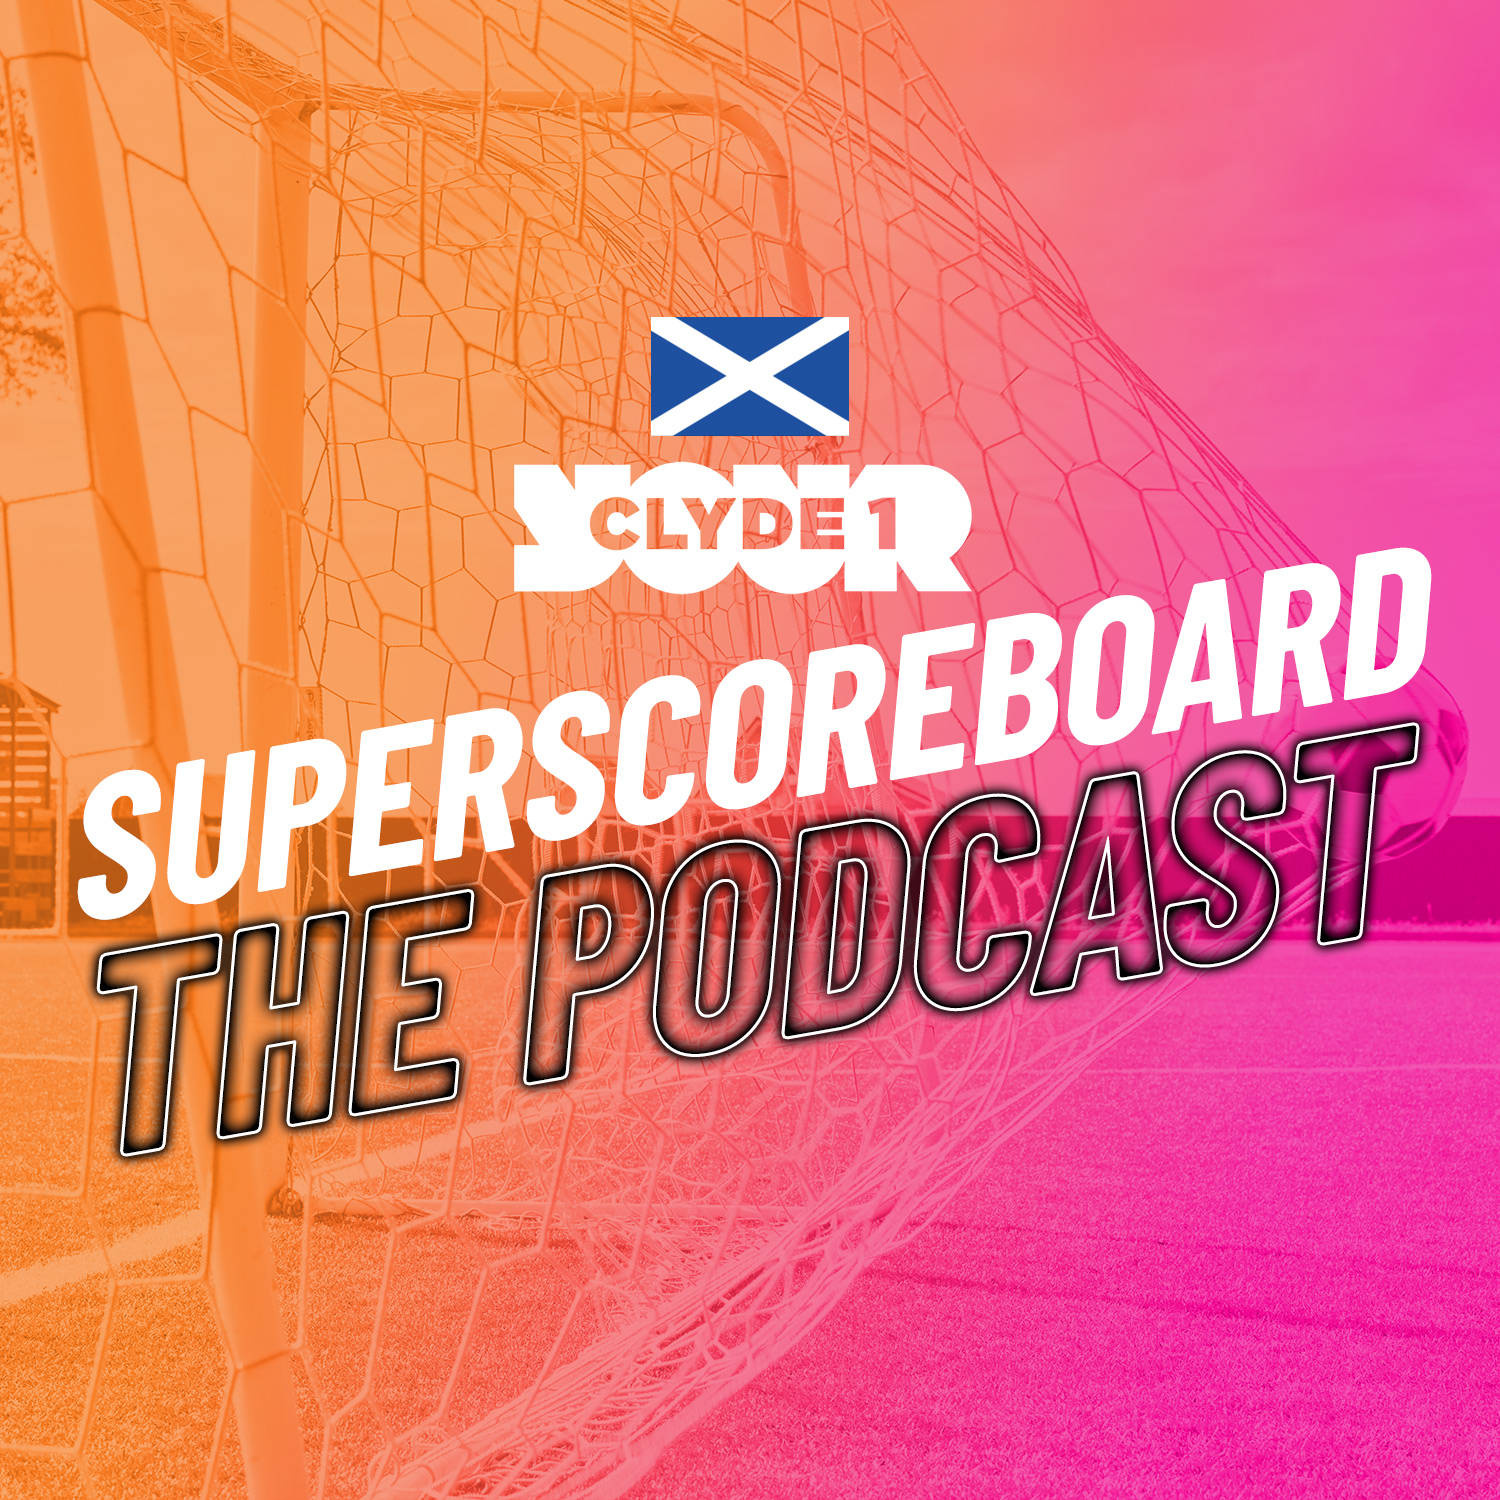 Tuesday 12th December Clyde 1 Superscoreboard